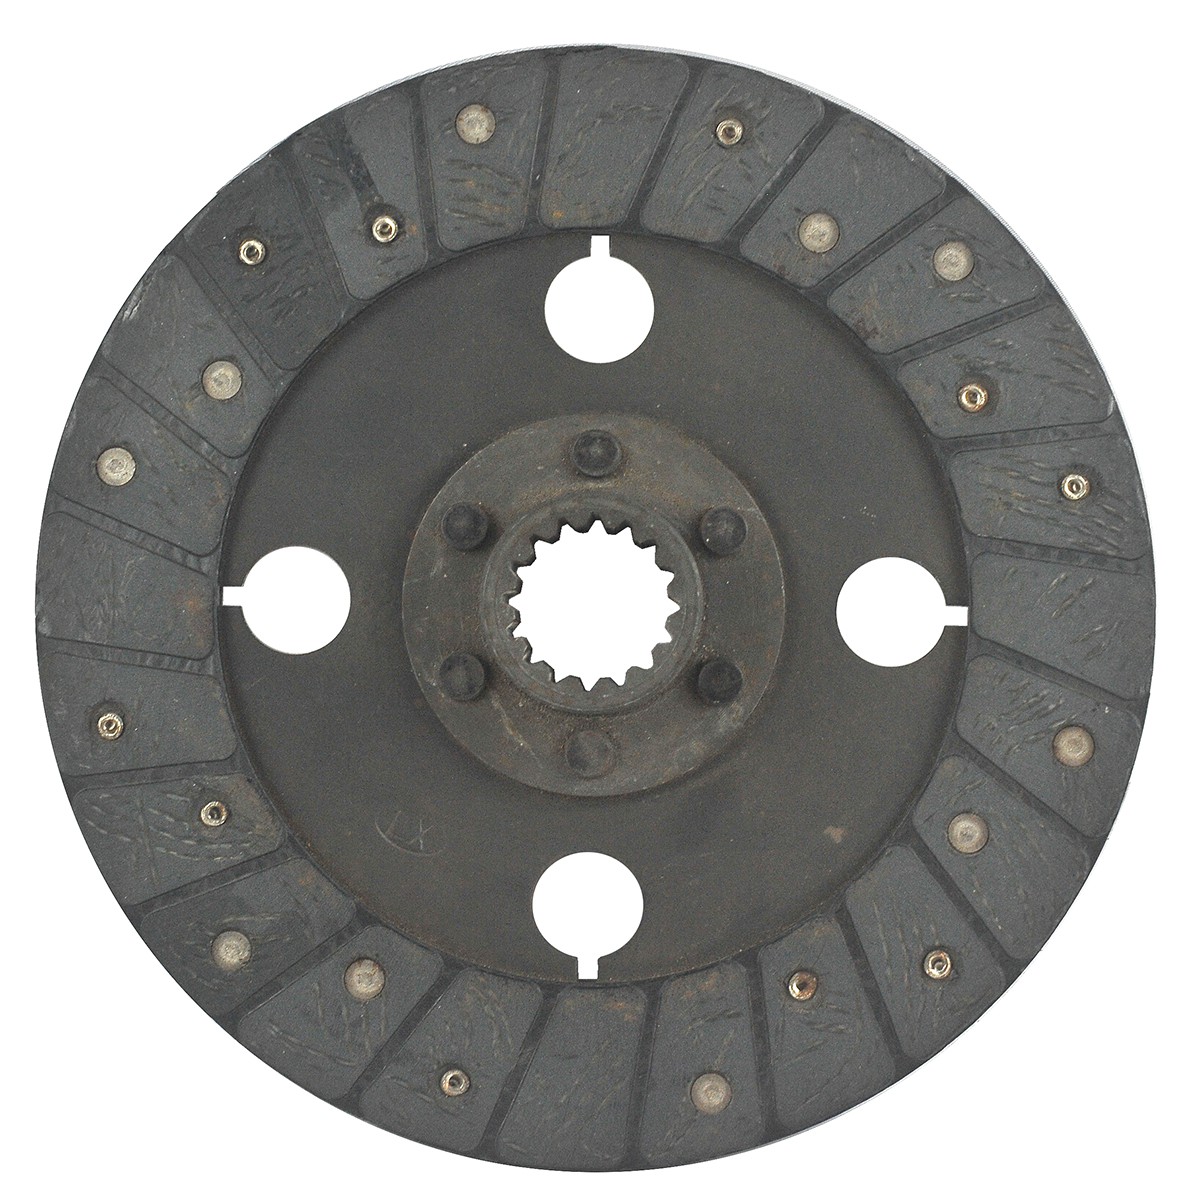 Clutch disc / 16T / 225 mm / Shibaura D23 / S4584